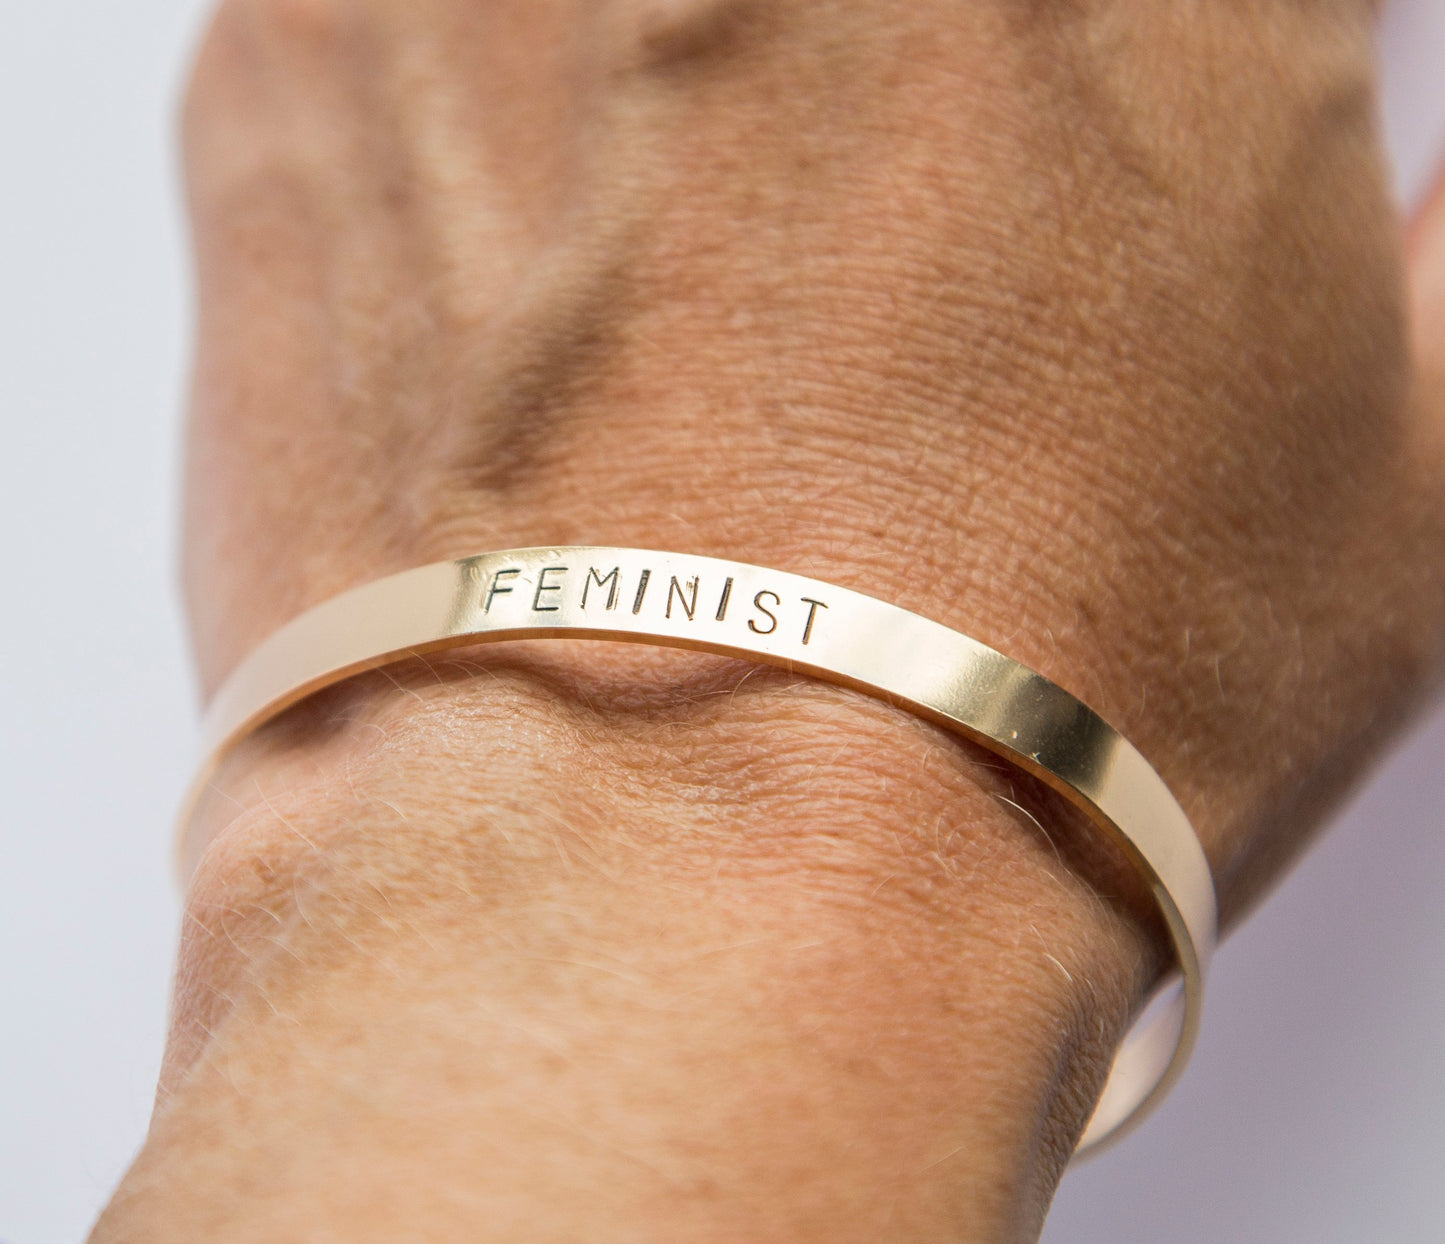 Feminist - armband